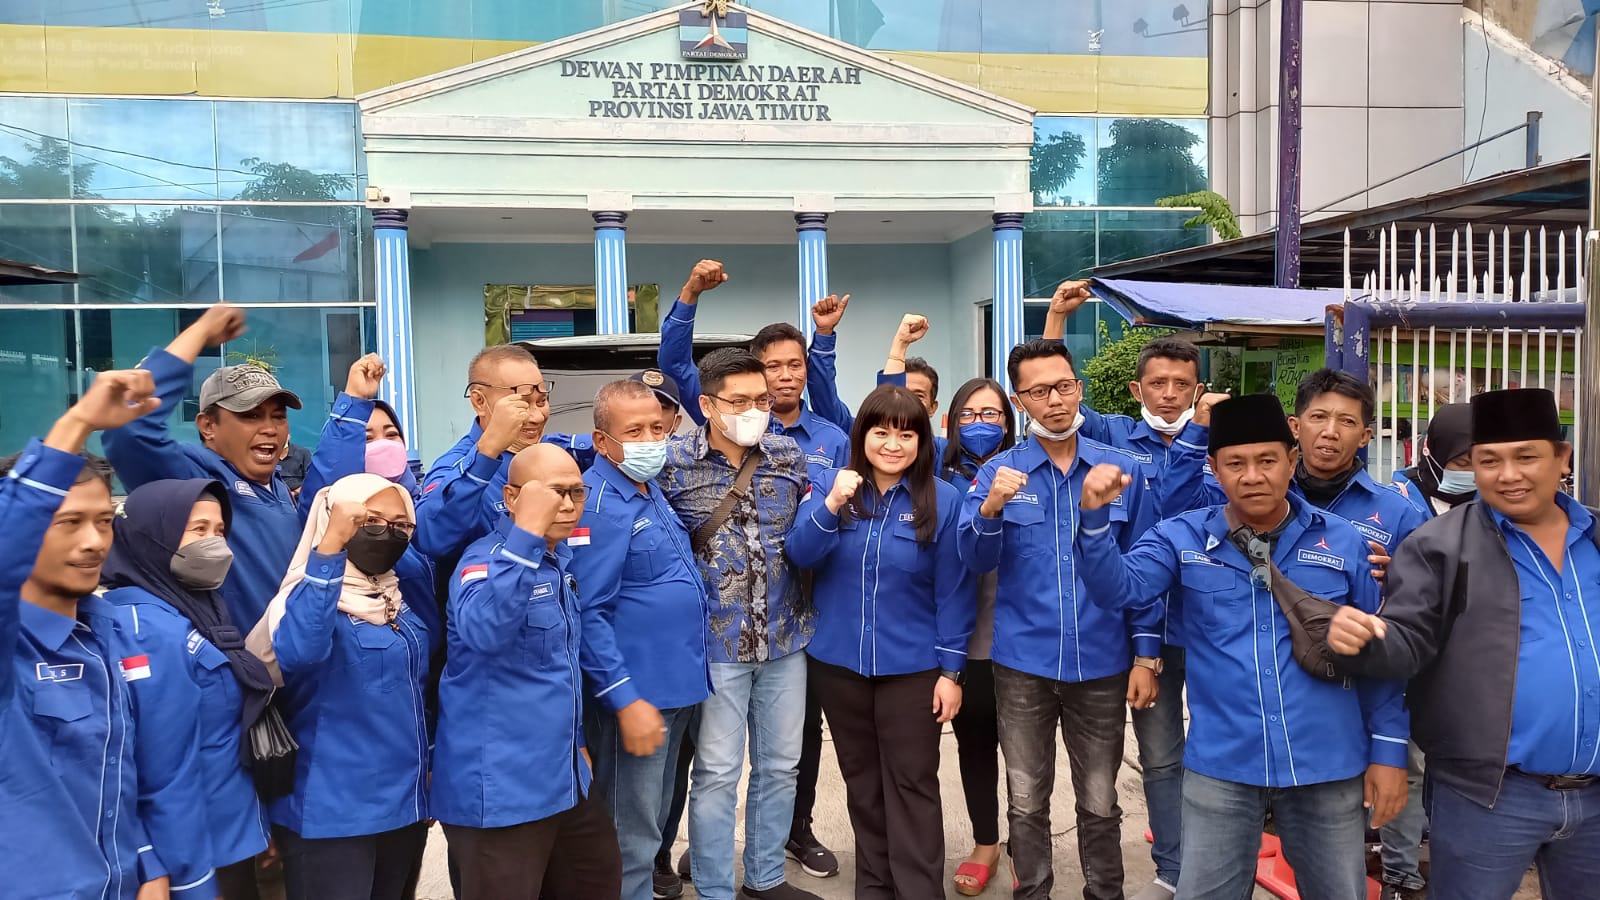 Herlina Harsono Njoto Daftar Jadi Ketua Partai Demokrat Surabaya